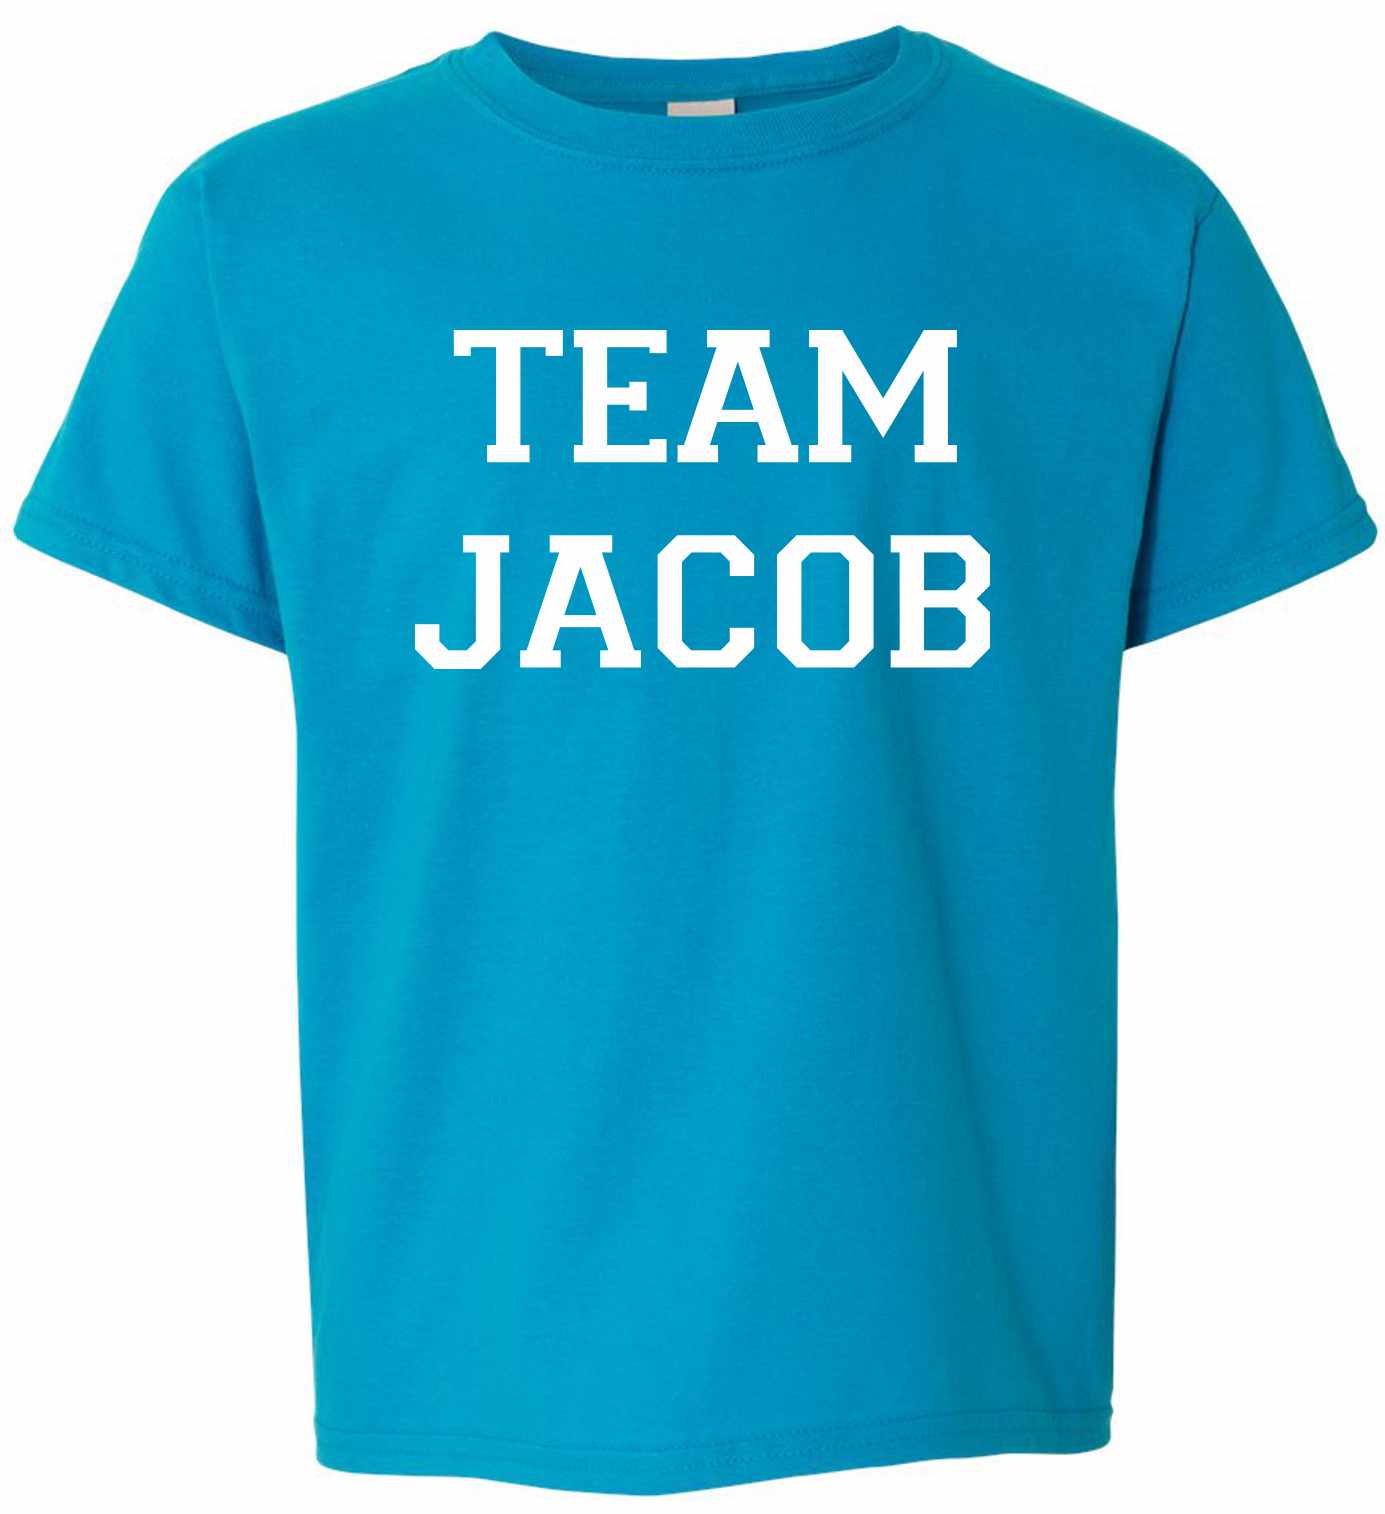 TEAM JACOB on Kids T-Shirt (#249-201)